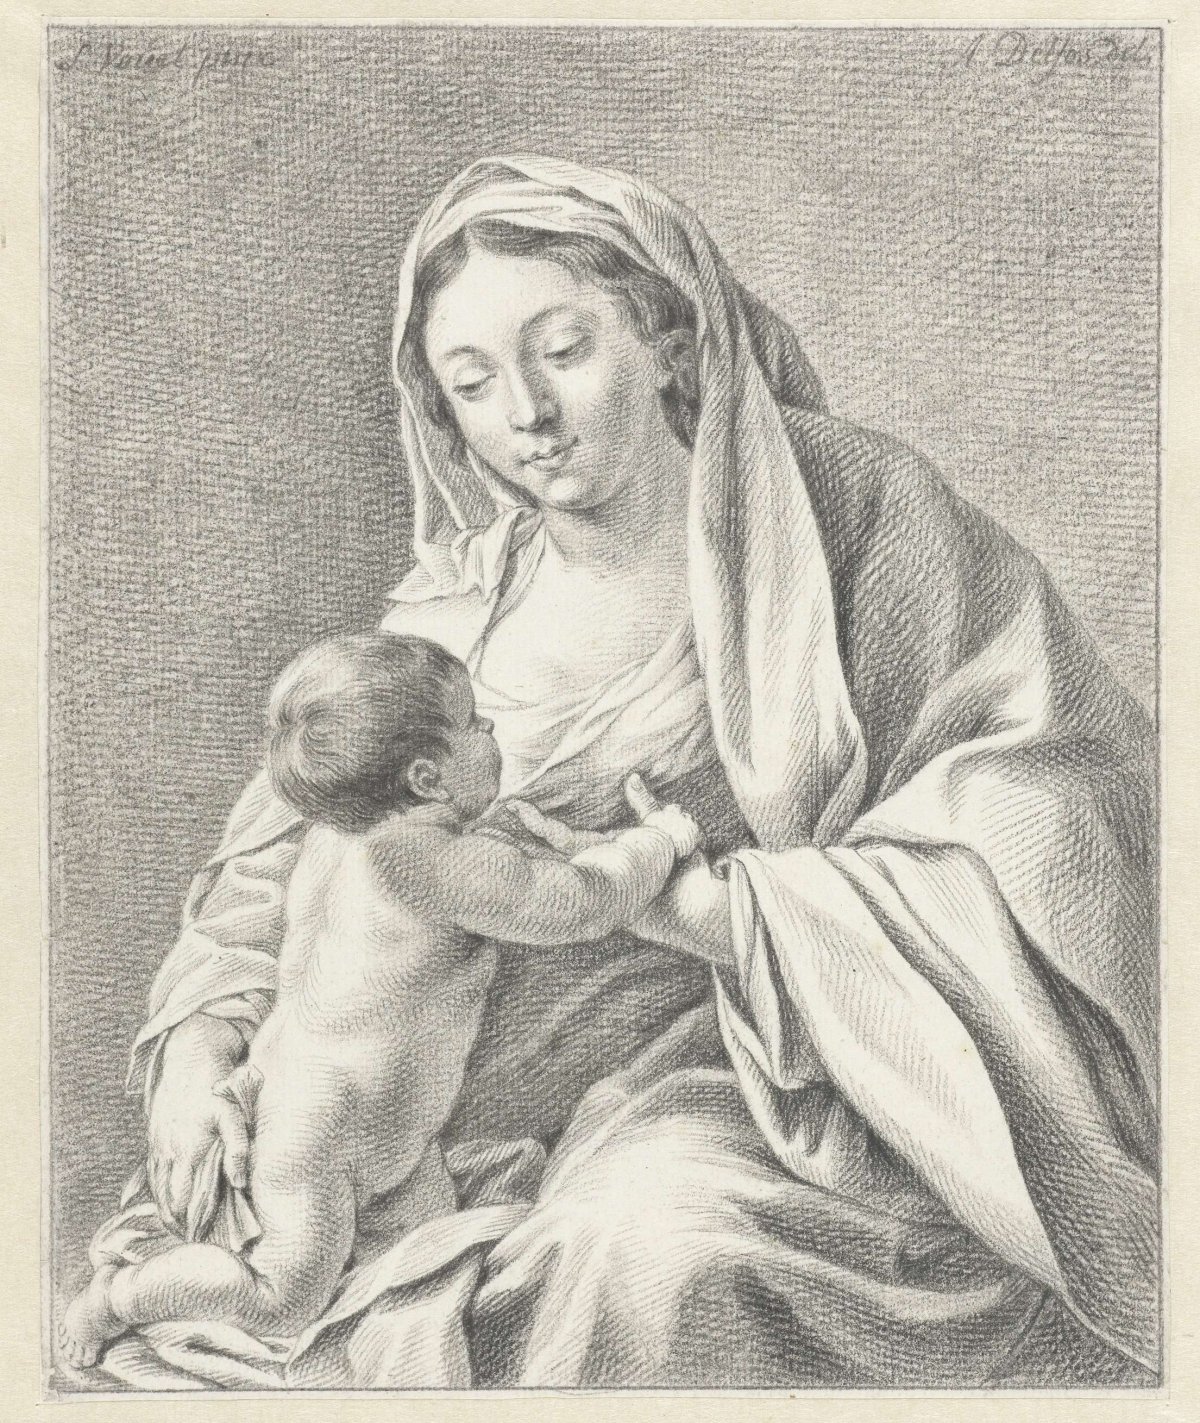 Madonna, Abraham Delfos, 1741 - 1820